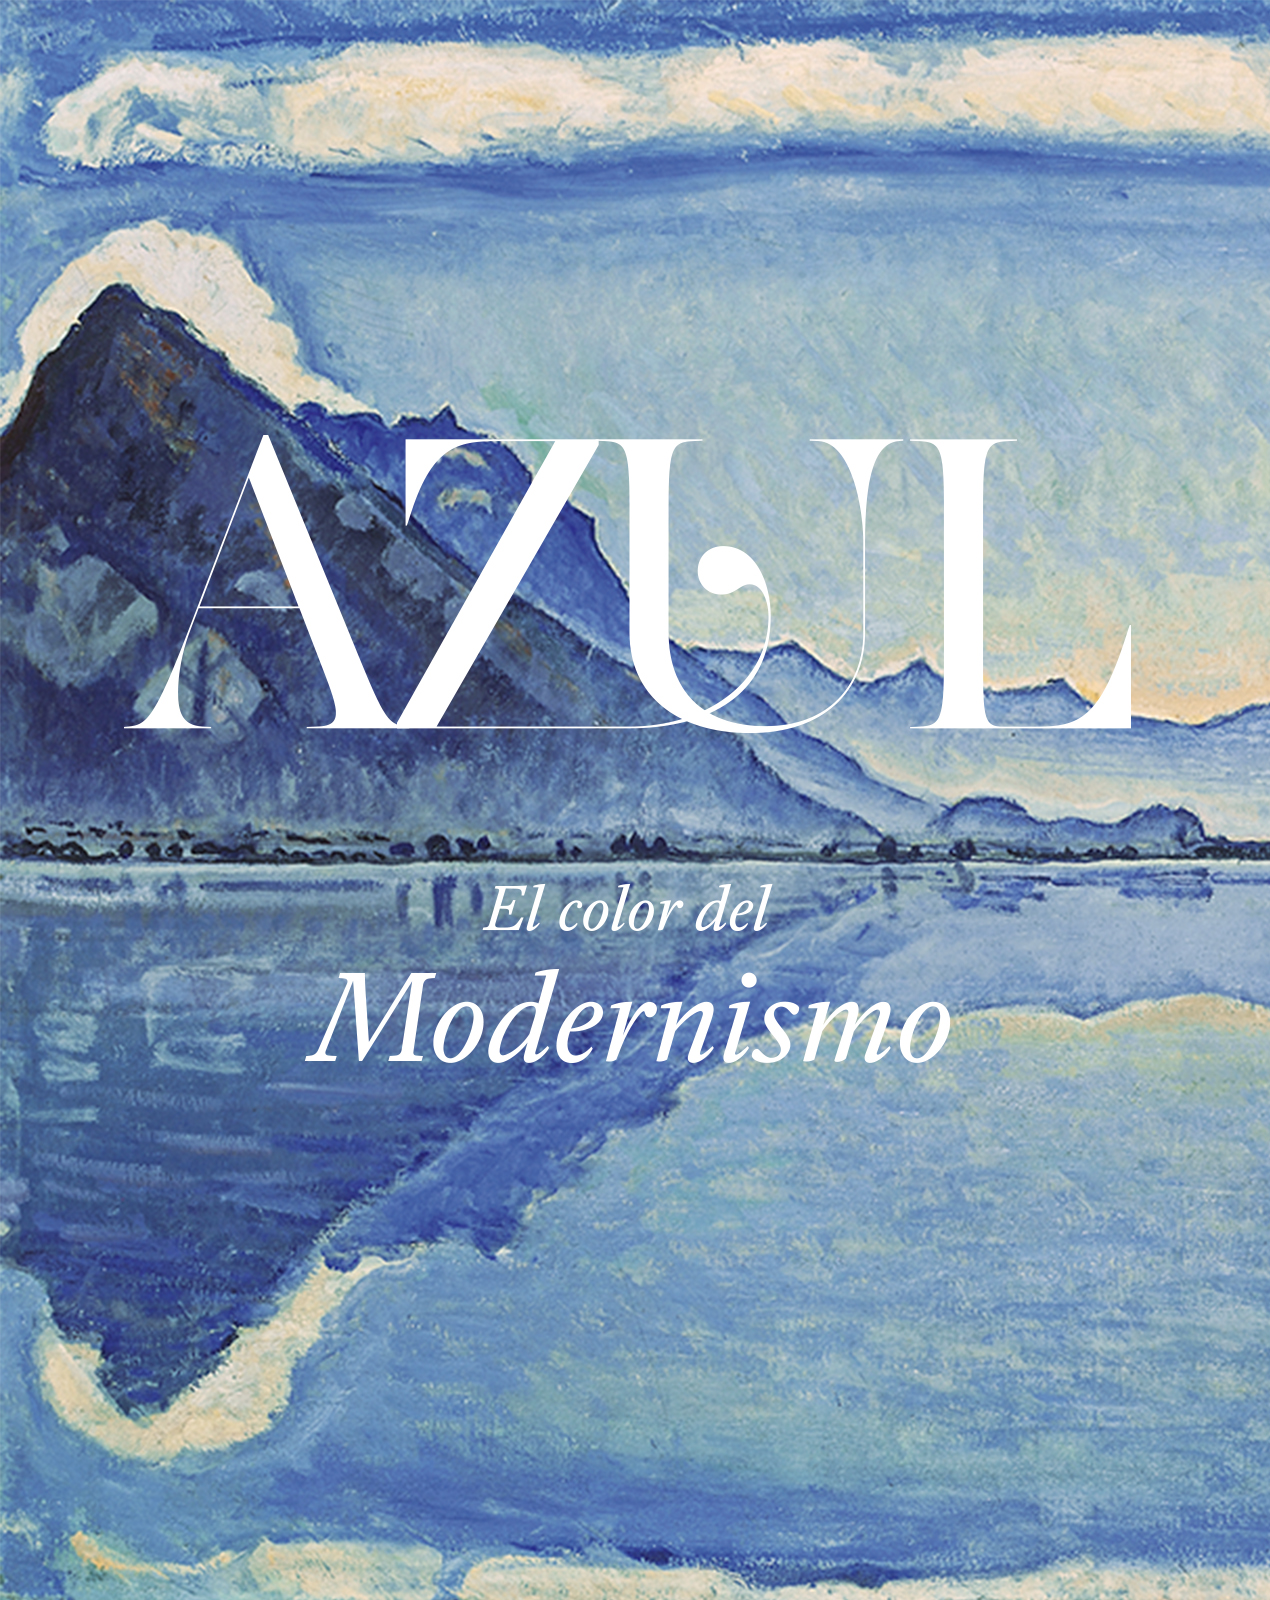 Exposición Azul en Color del Modernismo en Caixa Forum Sevilla